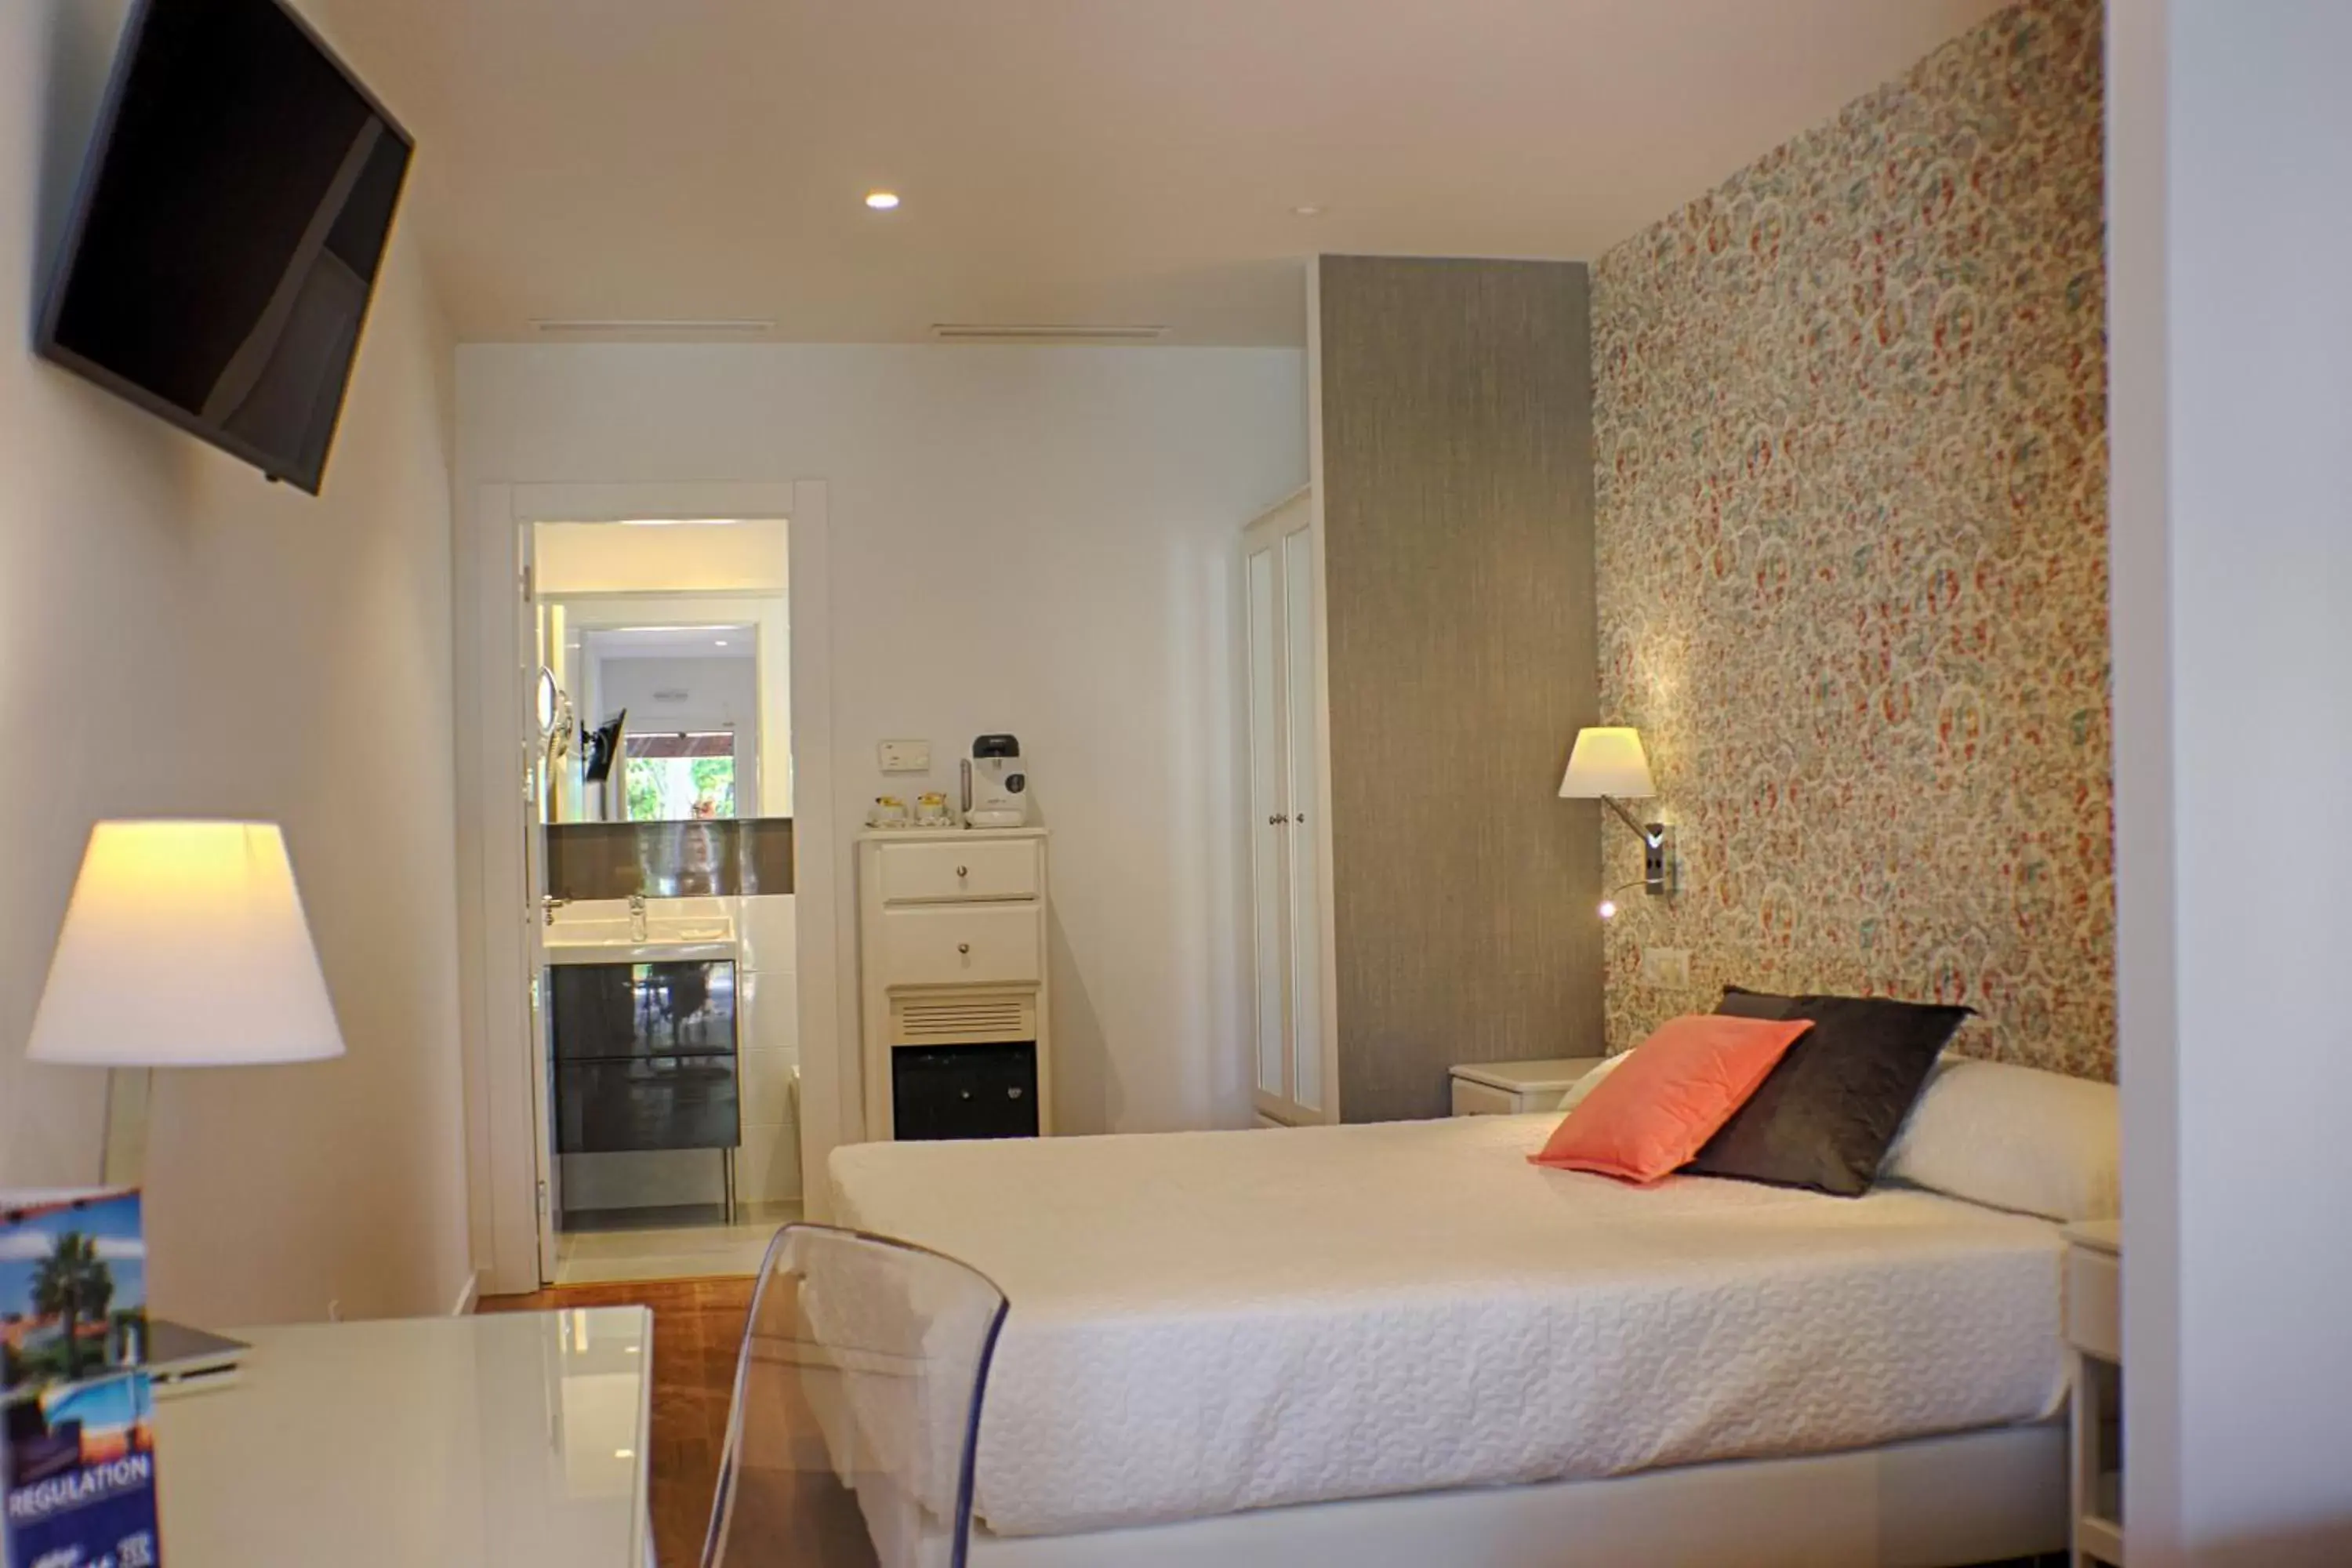 Bedroom, Room Photo in Hotel Malaga Picasso